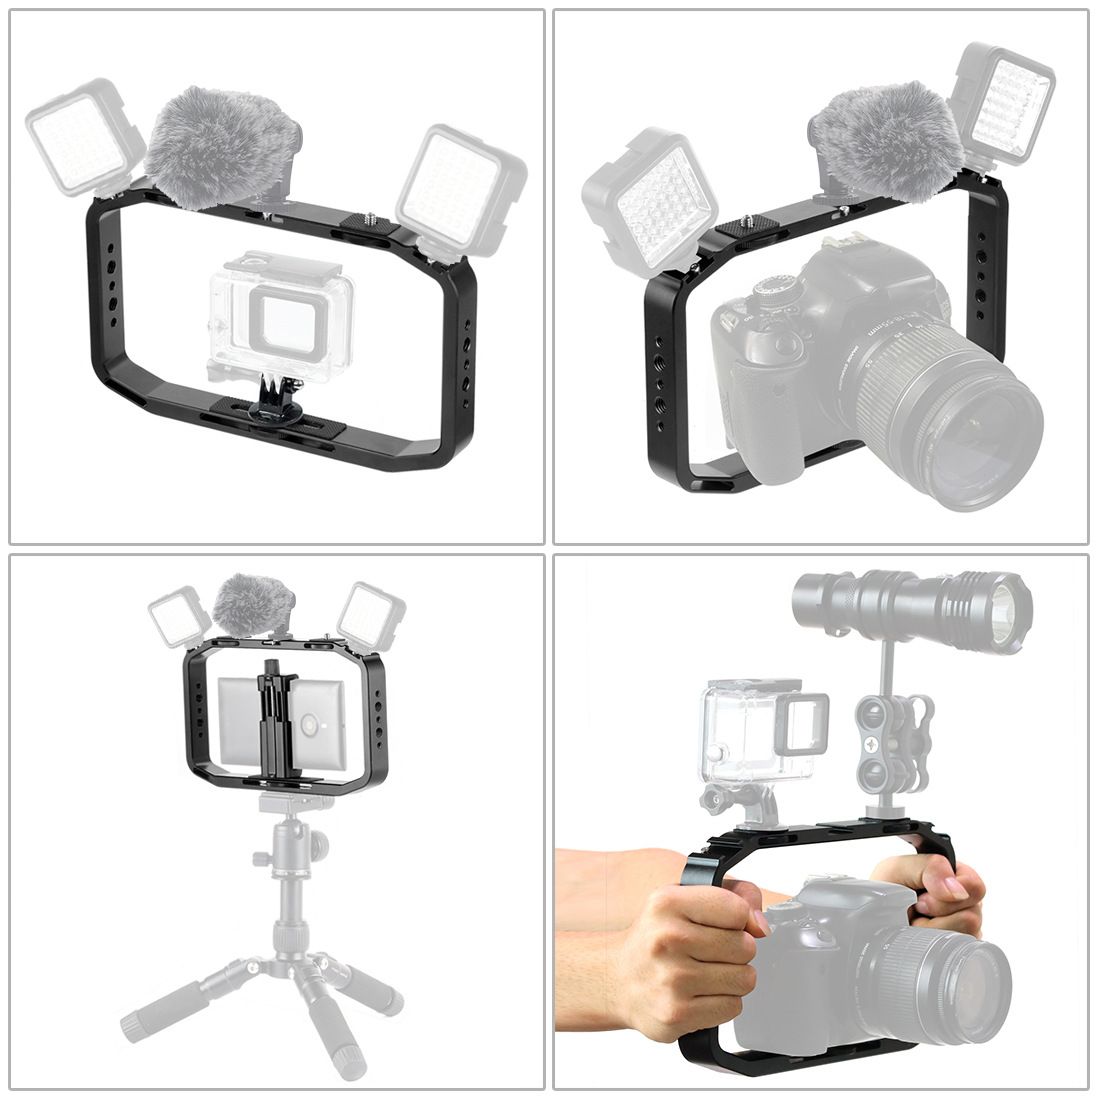 PULUZ-PU418-Metal-Handheld-Stabilizer-Rig-with-Cold-Shoe-Mount-for-Smarphone-DSLR-Camera-Action-Spor-1590358